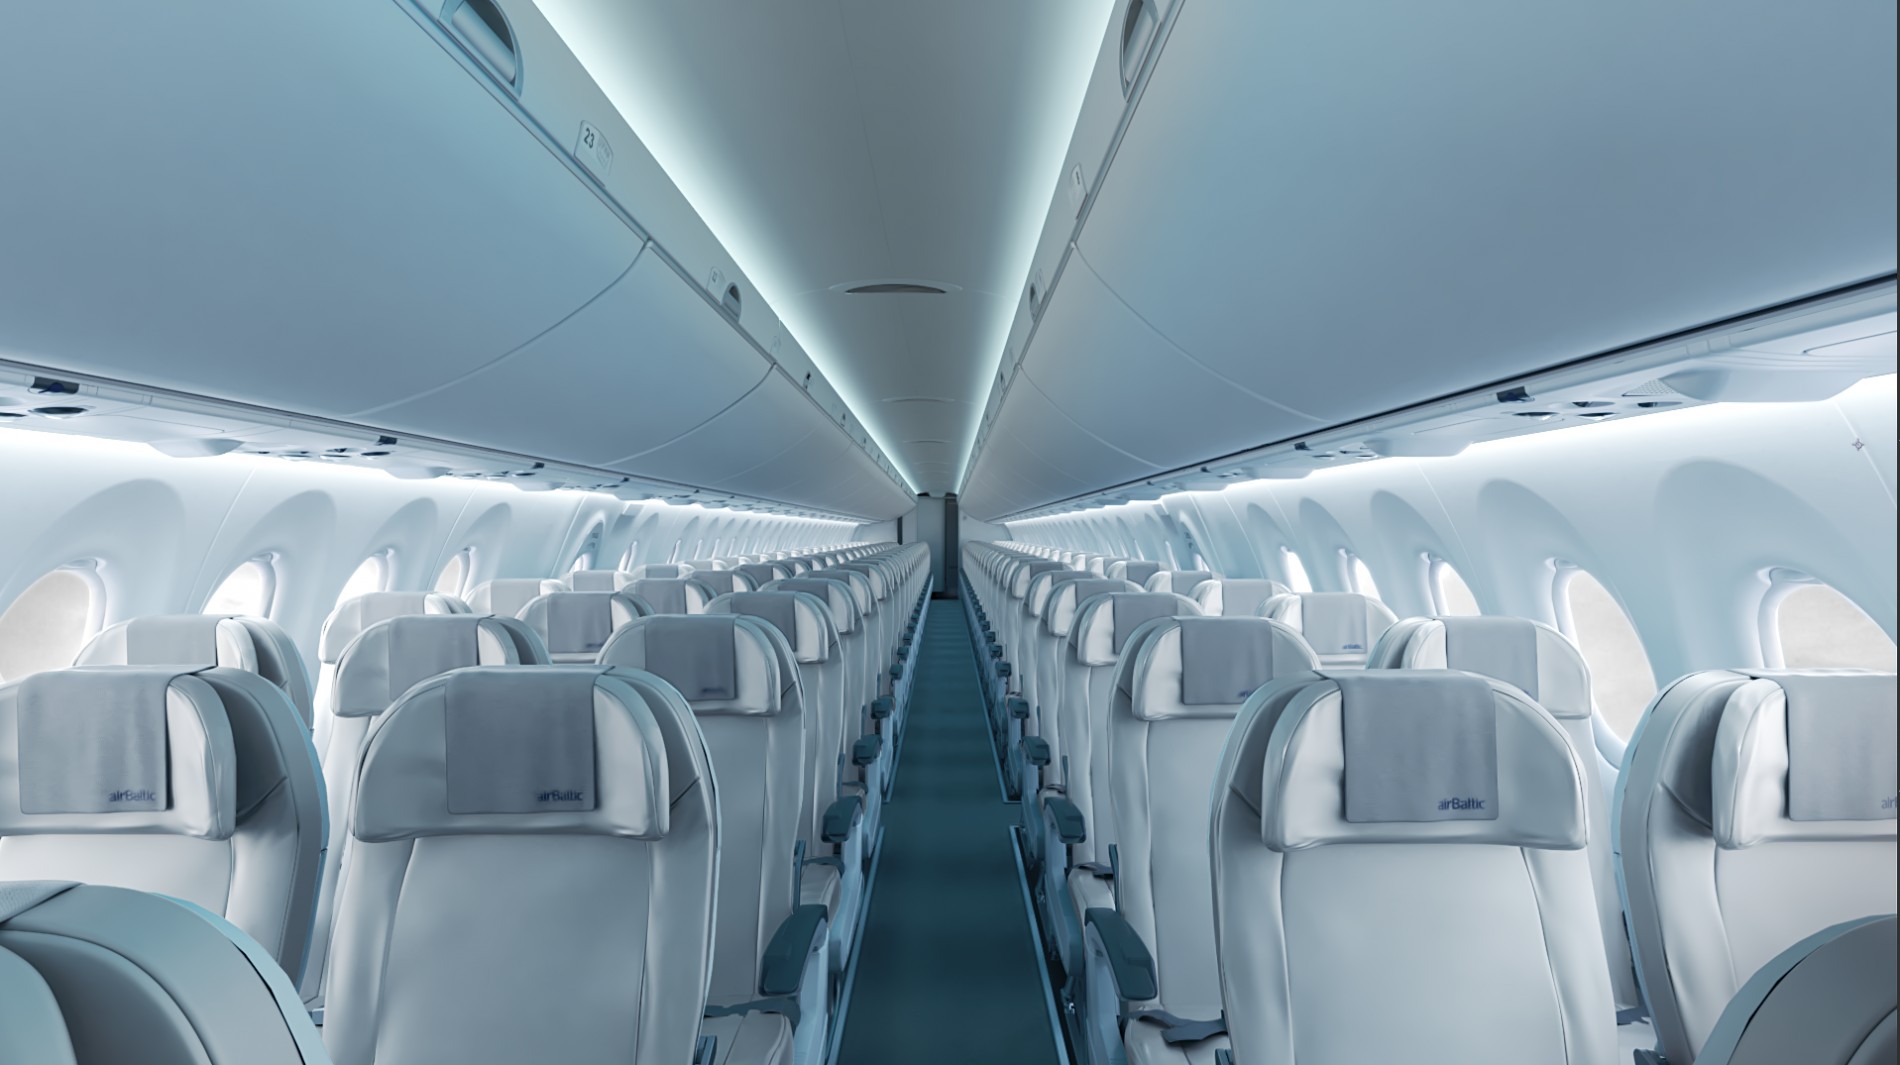 airbaltic airplane interior